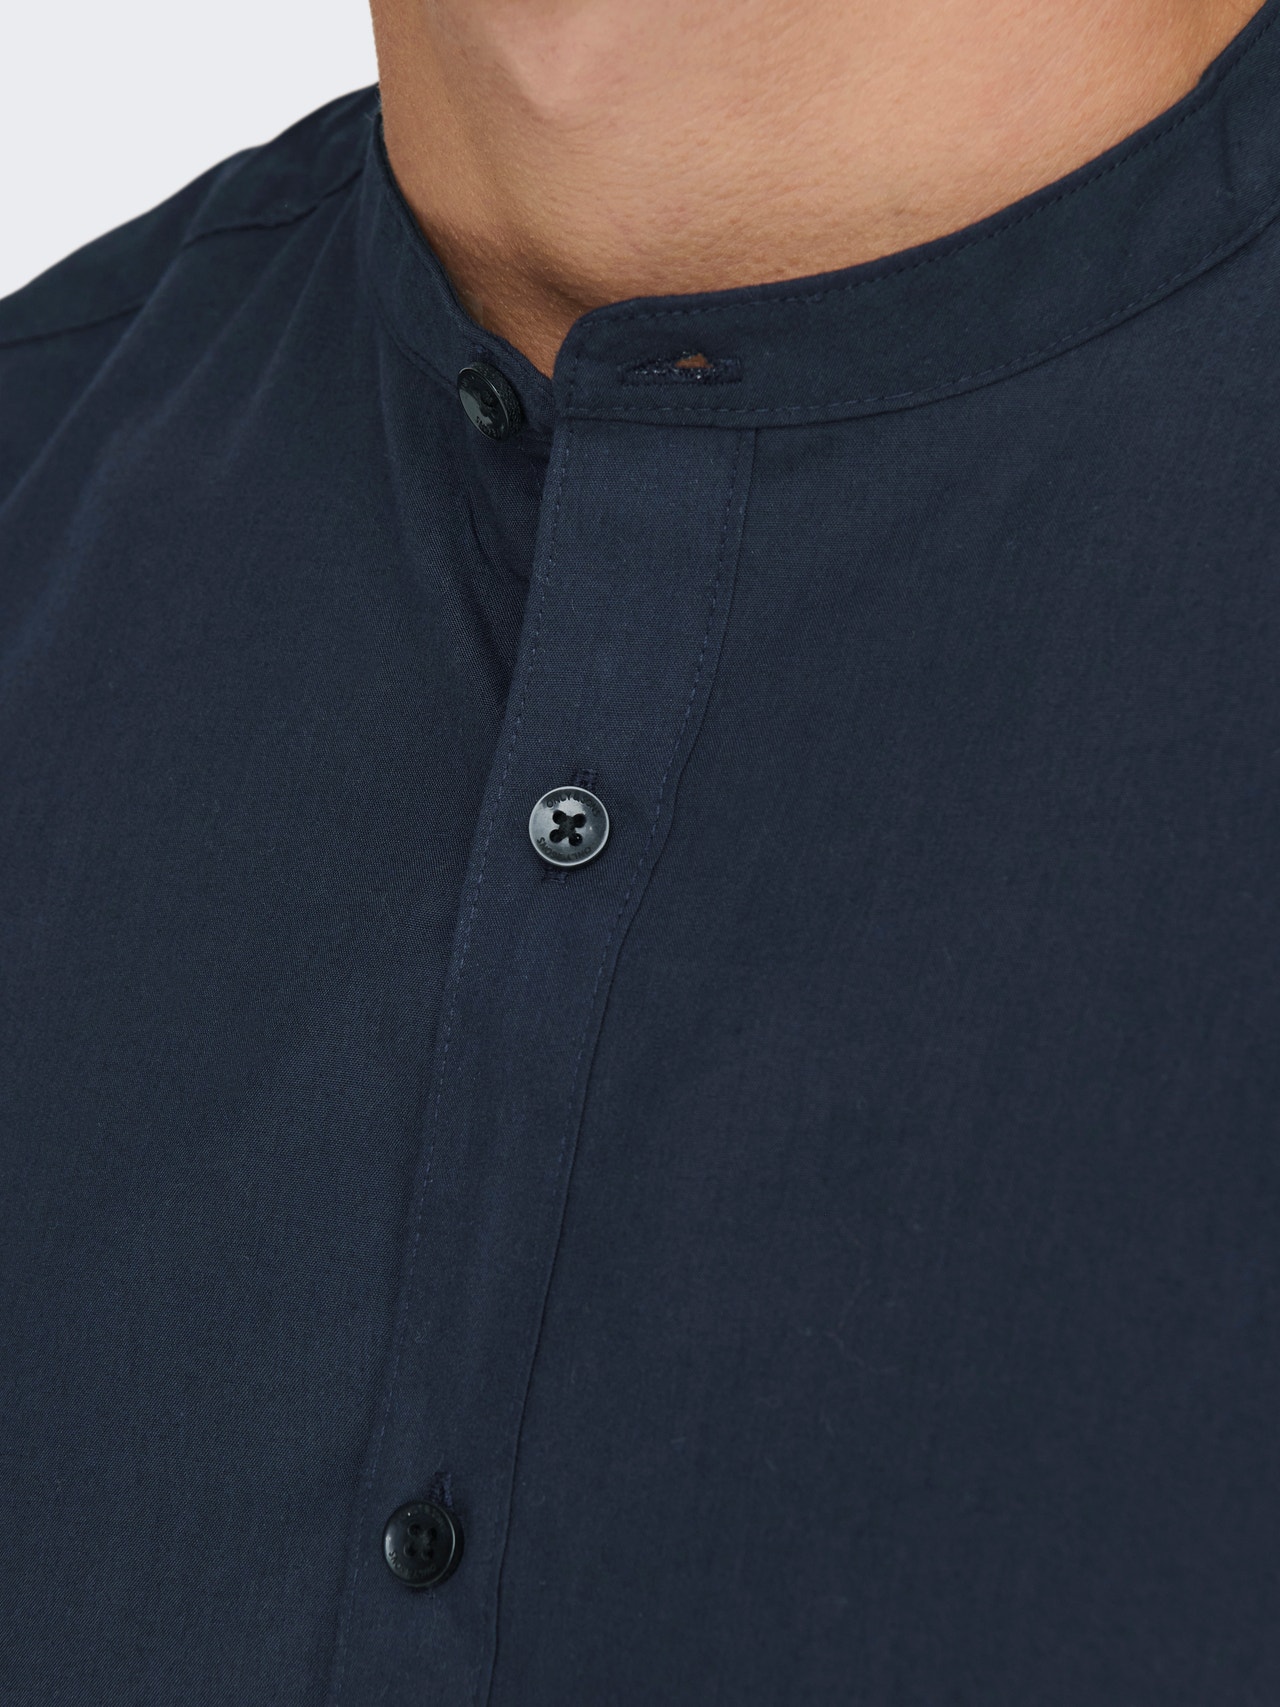 ONLY & SONS Slim Fit China Collar Shirt -Dark Navy - 22024167